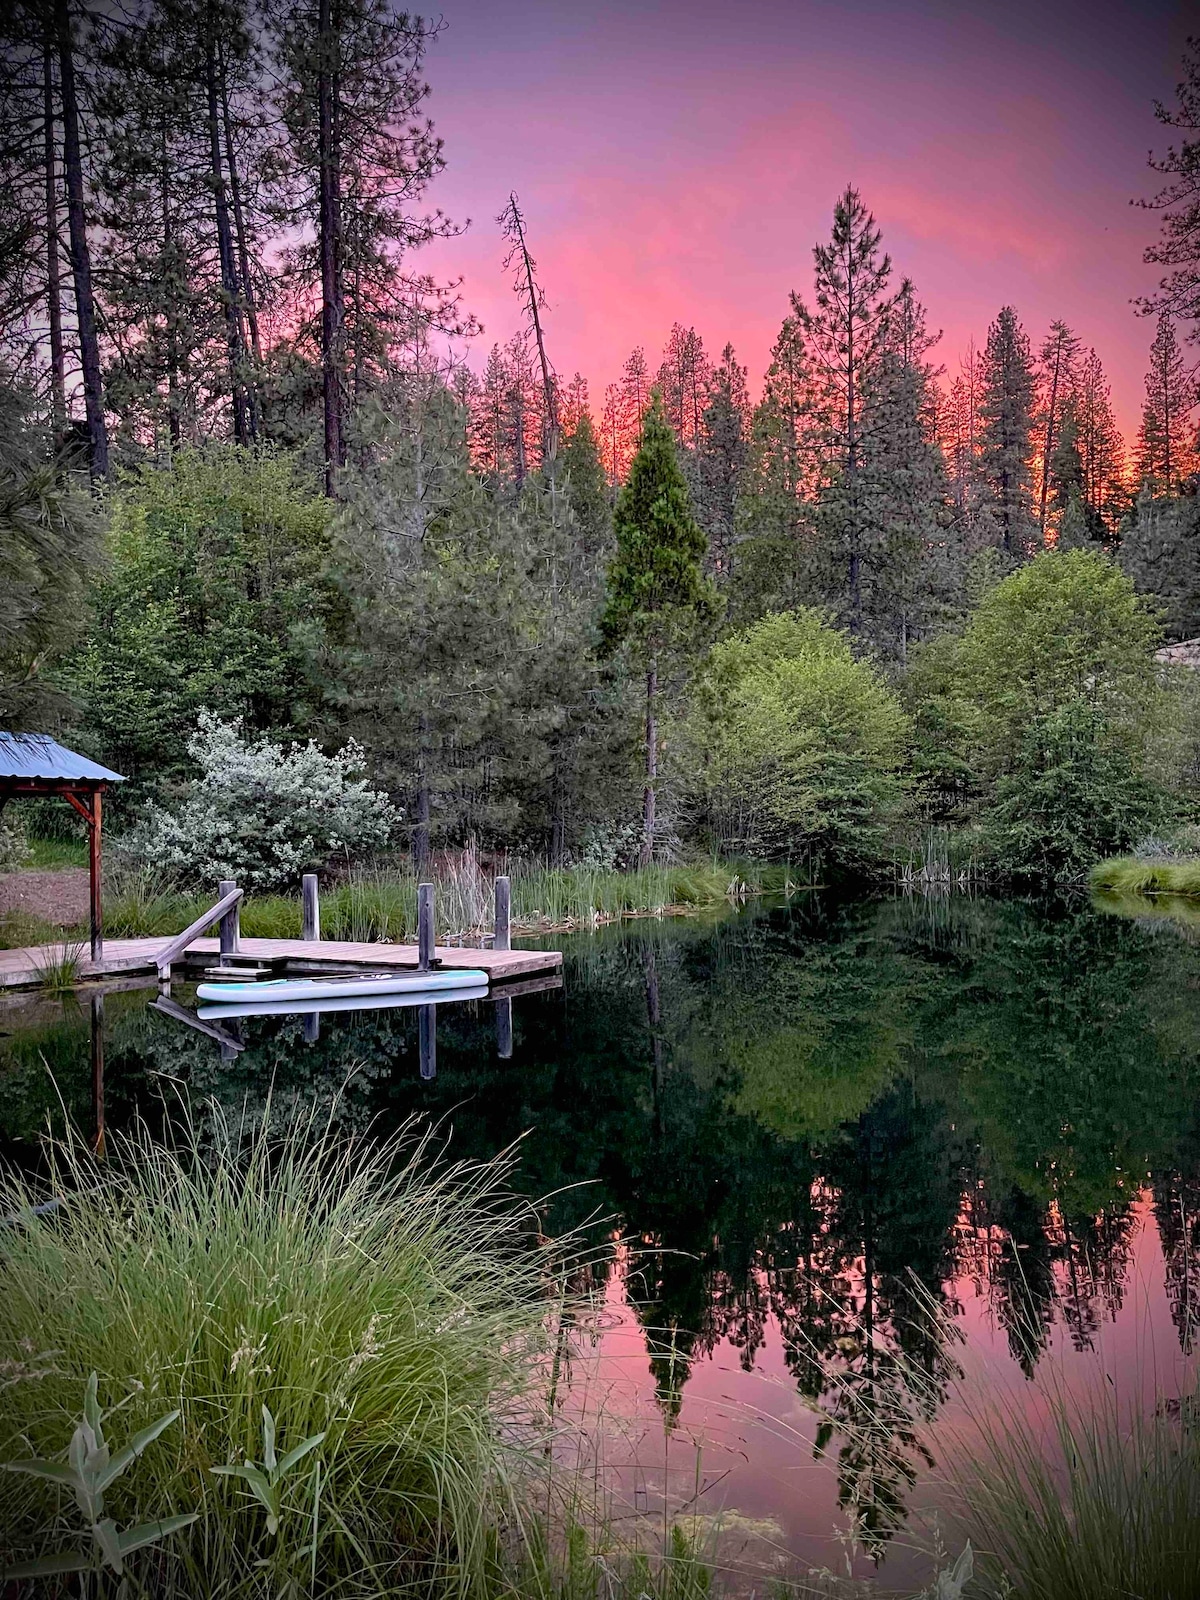 Luxurious & Unique Creek-side Cabin Retreat!